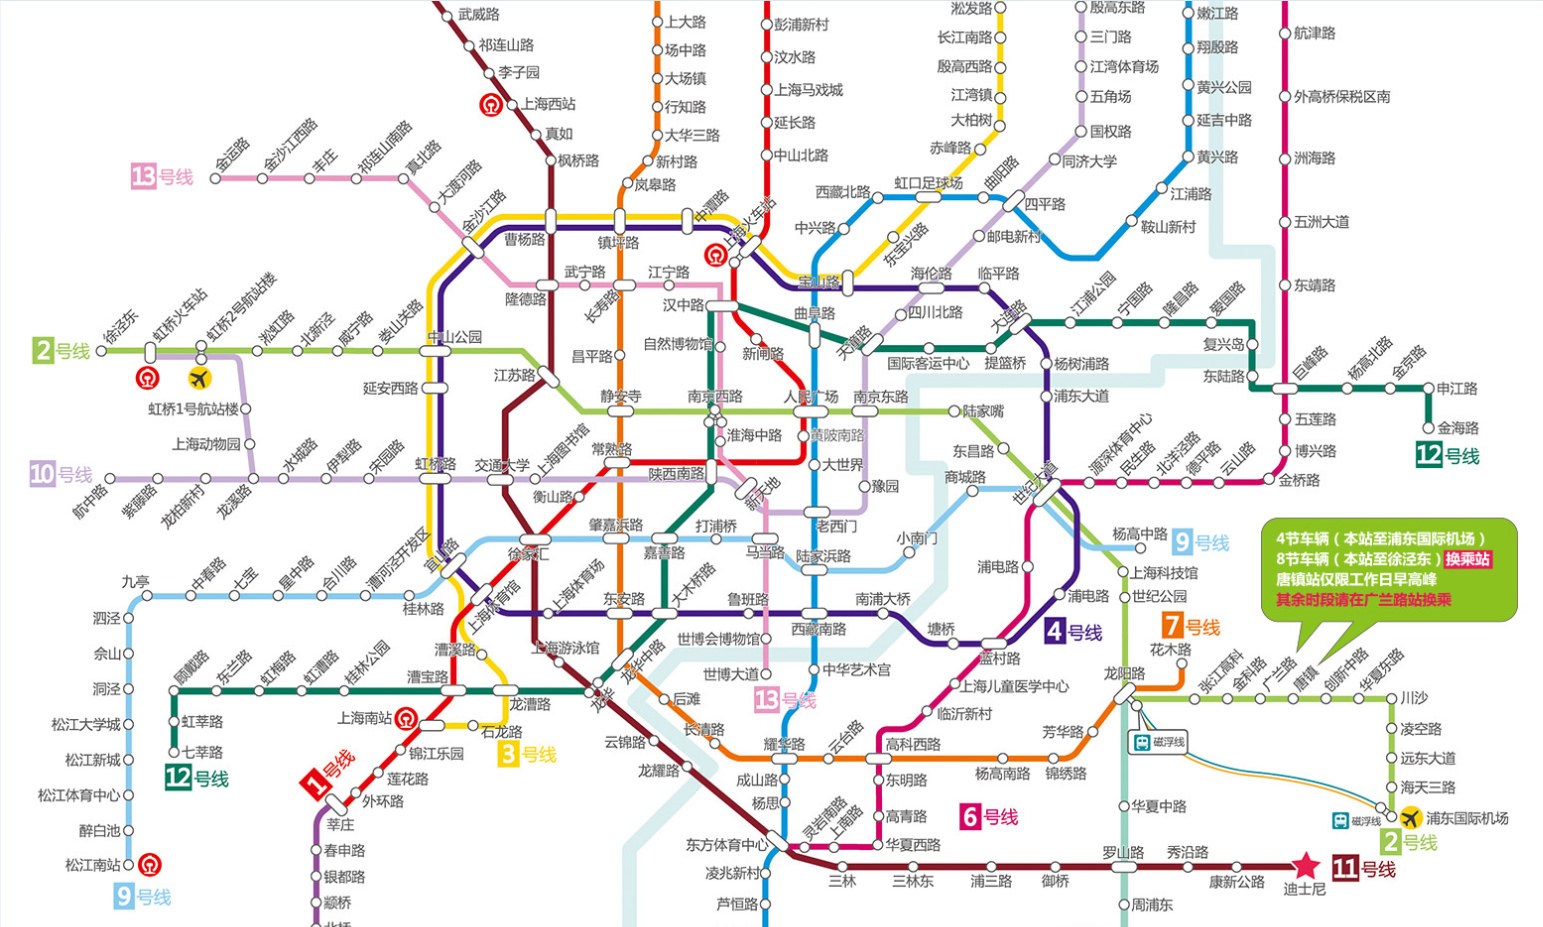 MTR_MAP.bmp